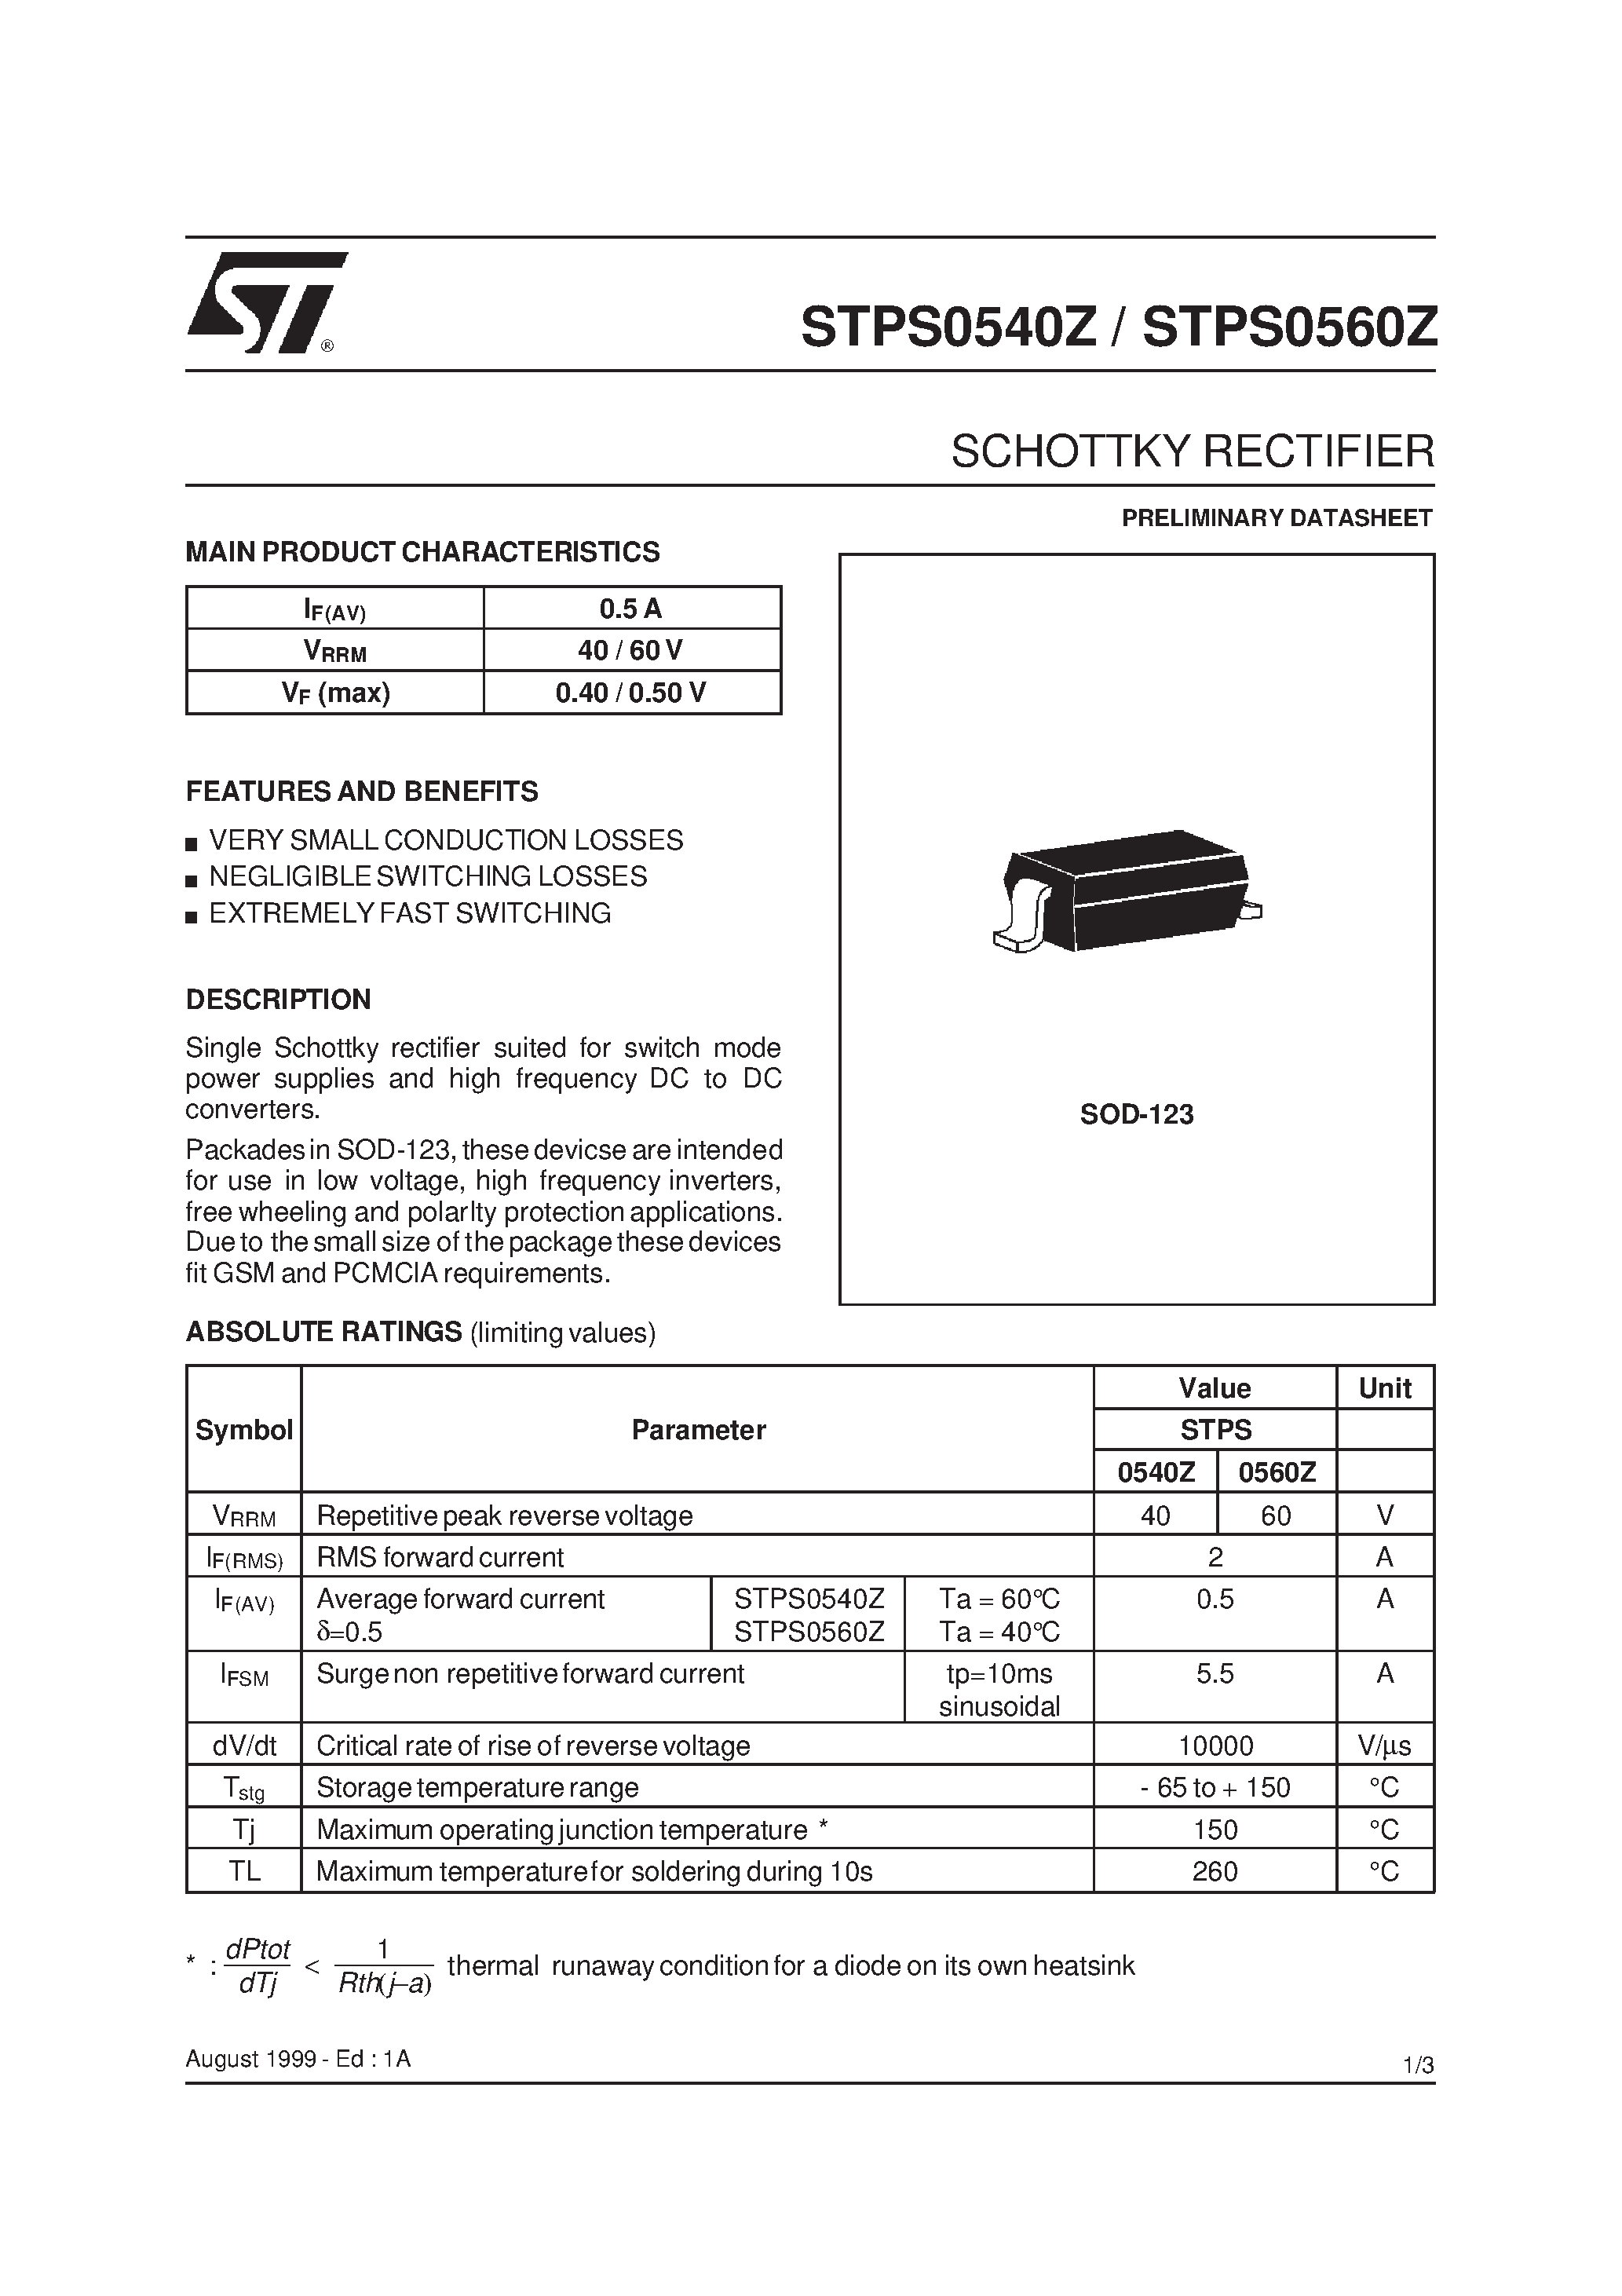 Datasheet STPS0540Z - (STPS0540Z / STPS0560Z) SCHOTTKY RECTIFIER page 1